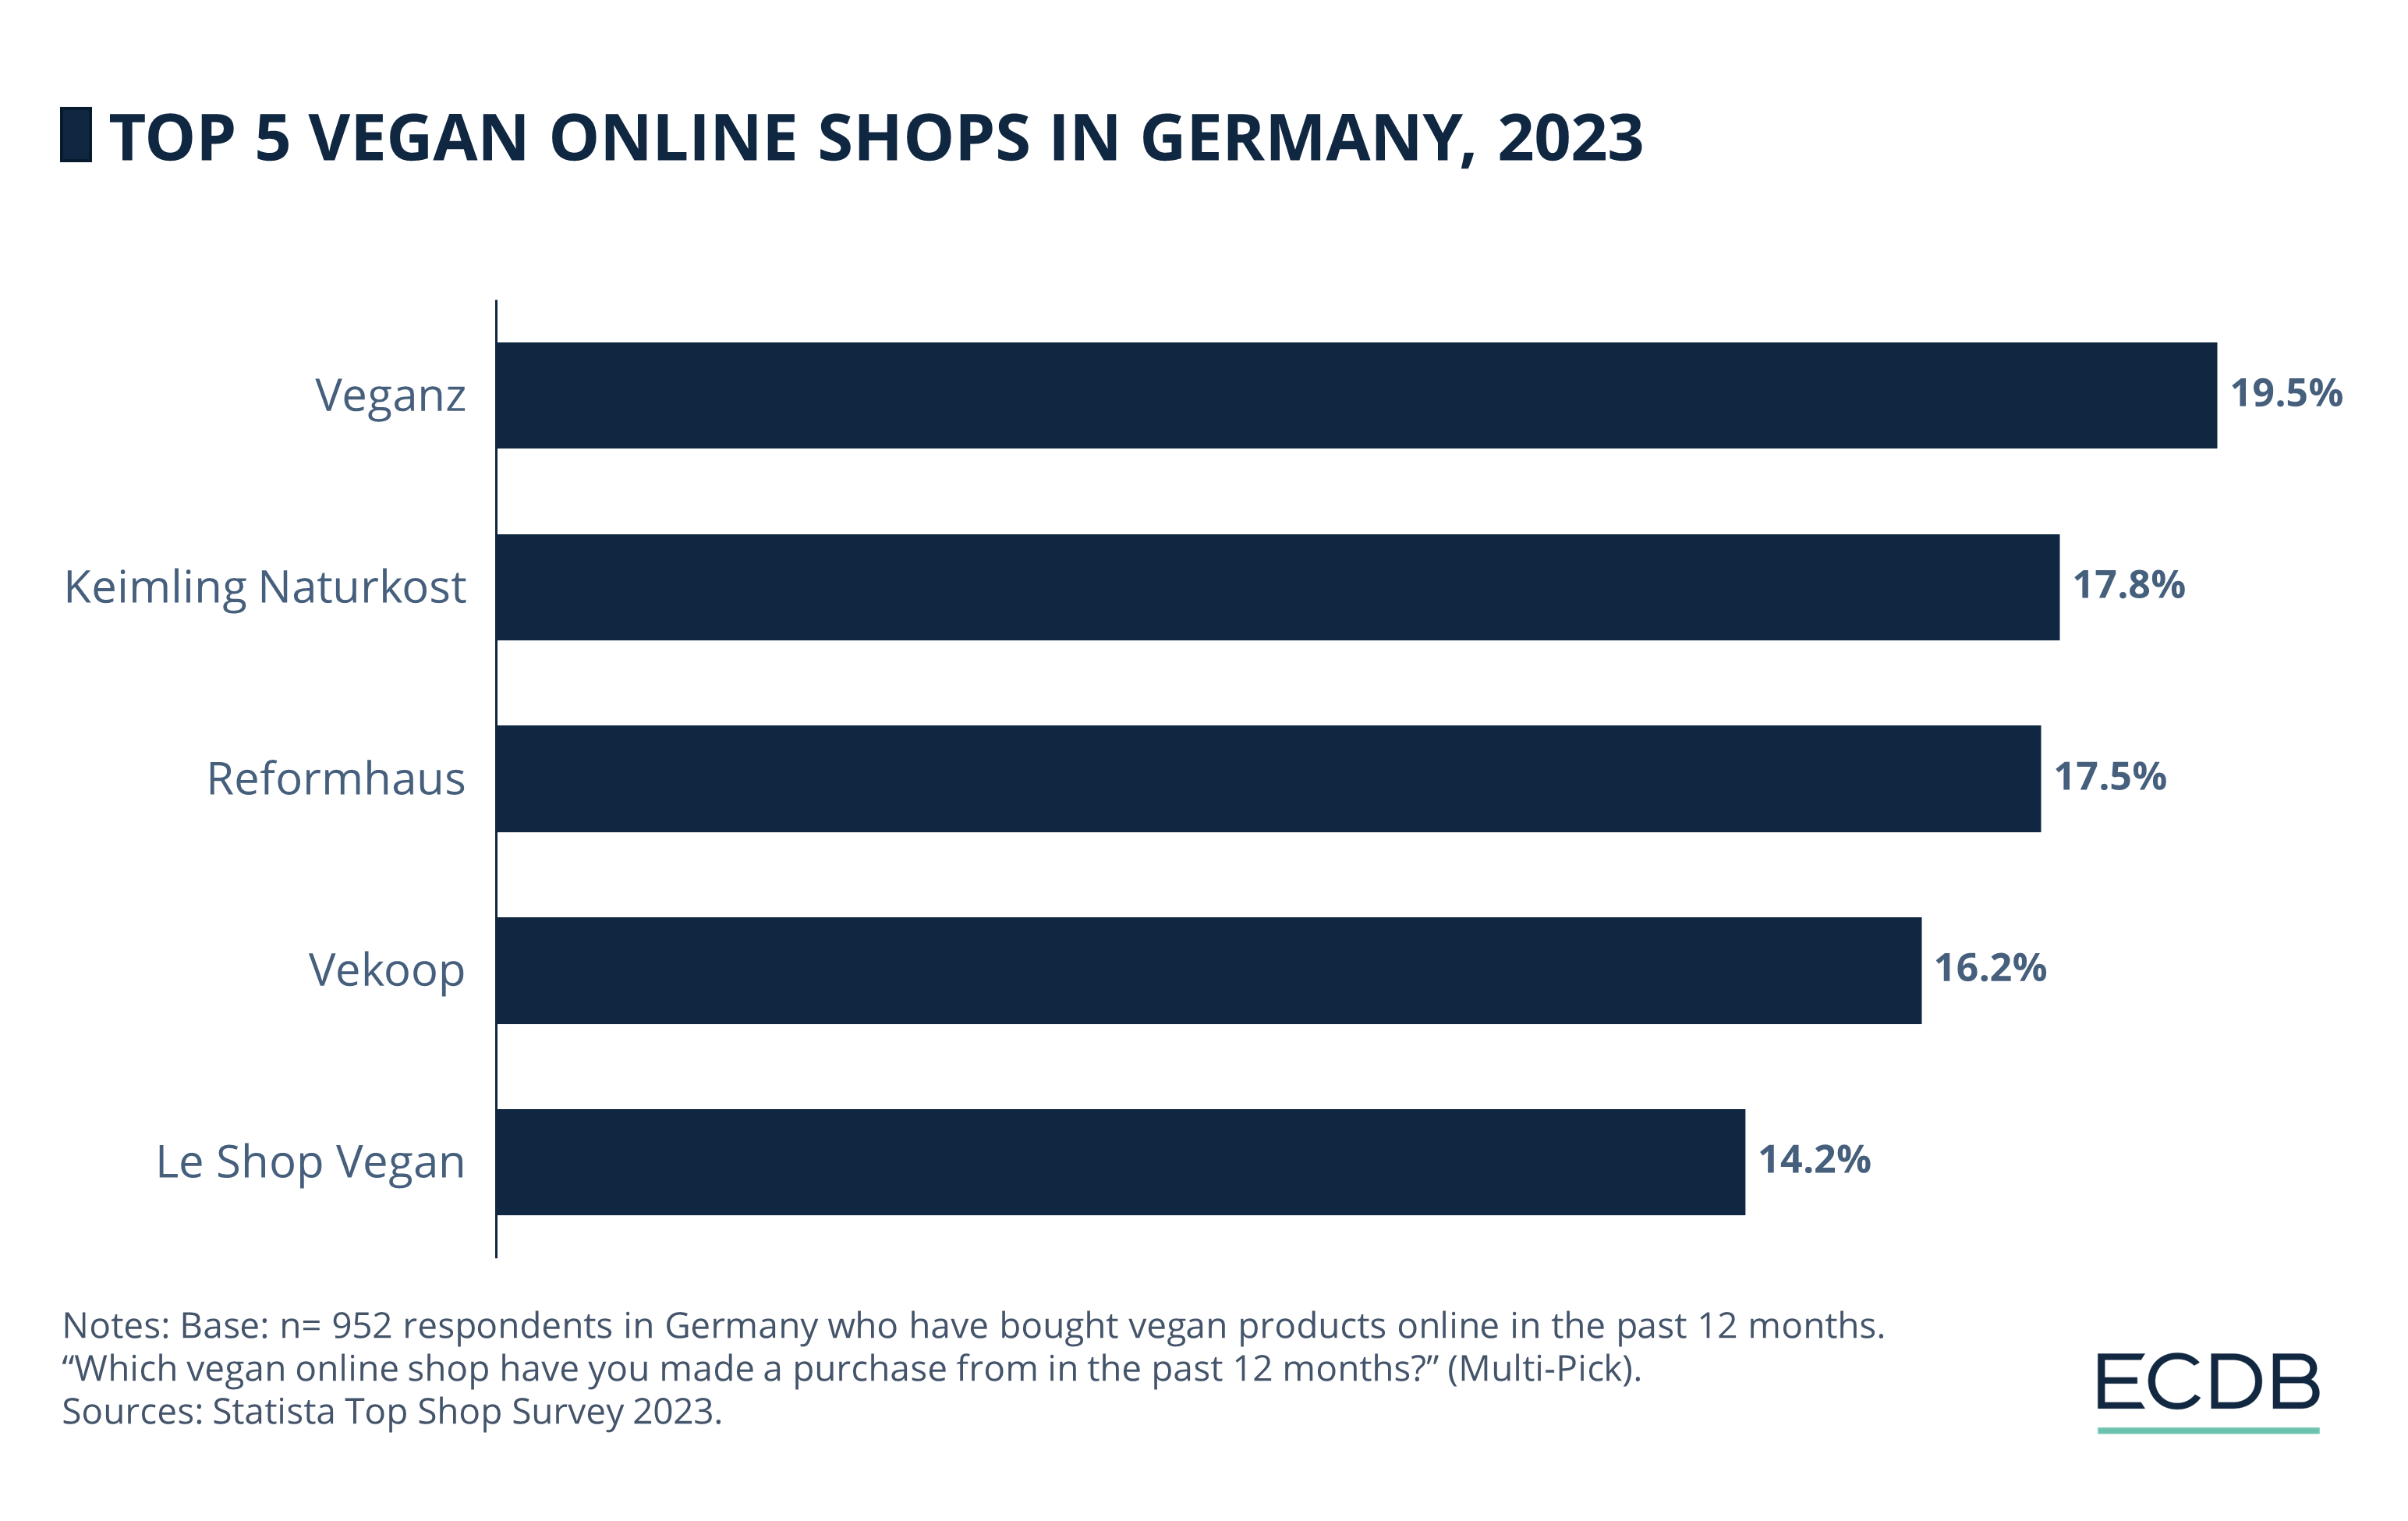 Top 5 Vegan Online Shops in Germany, 2023